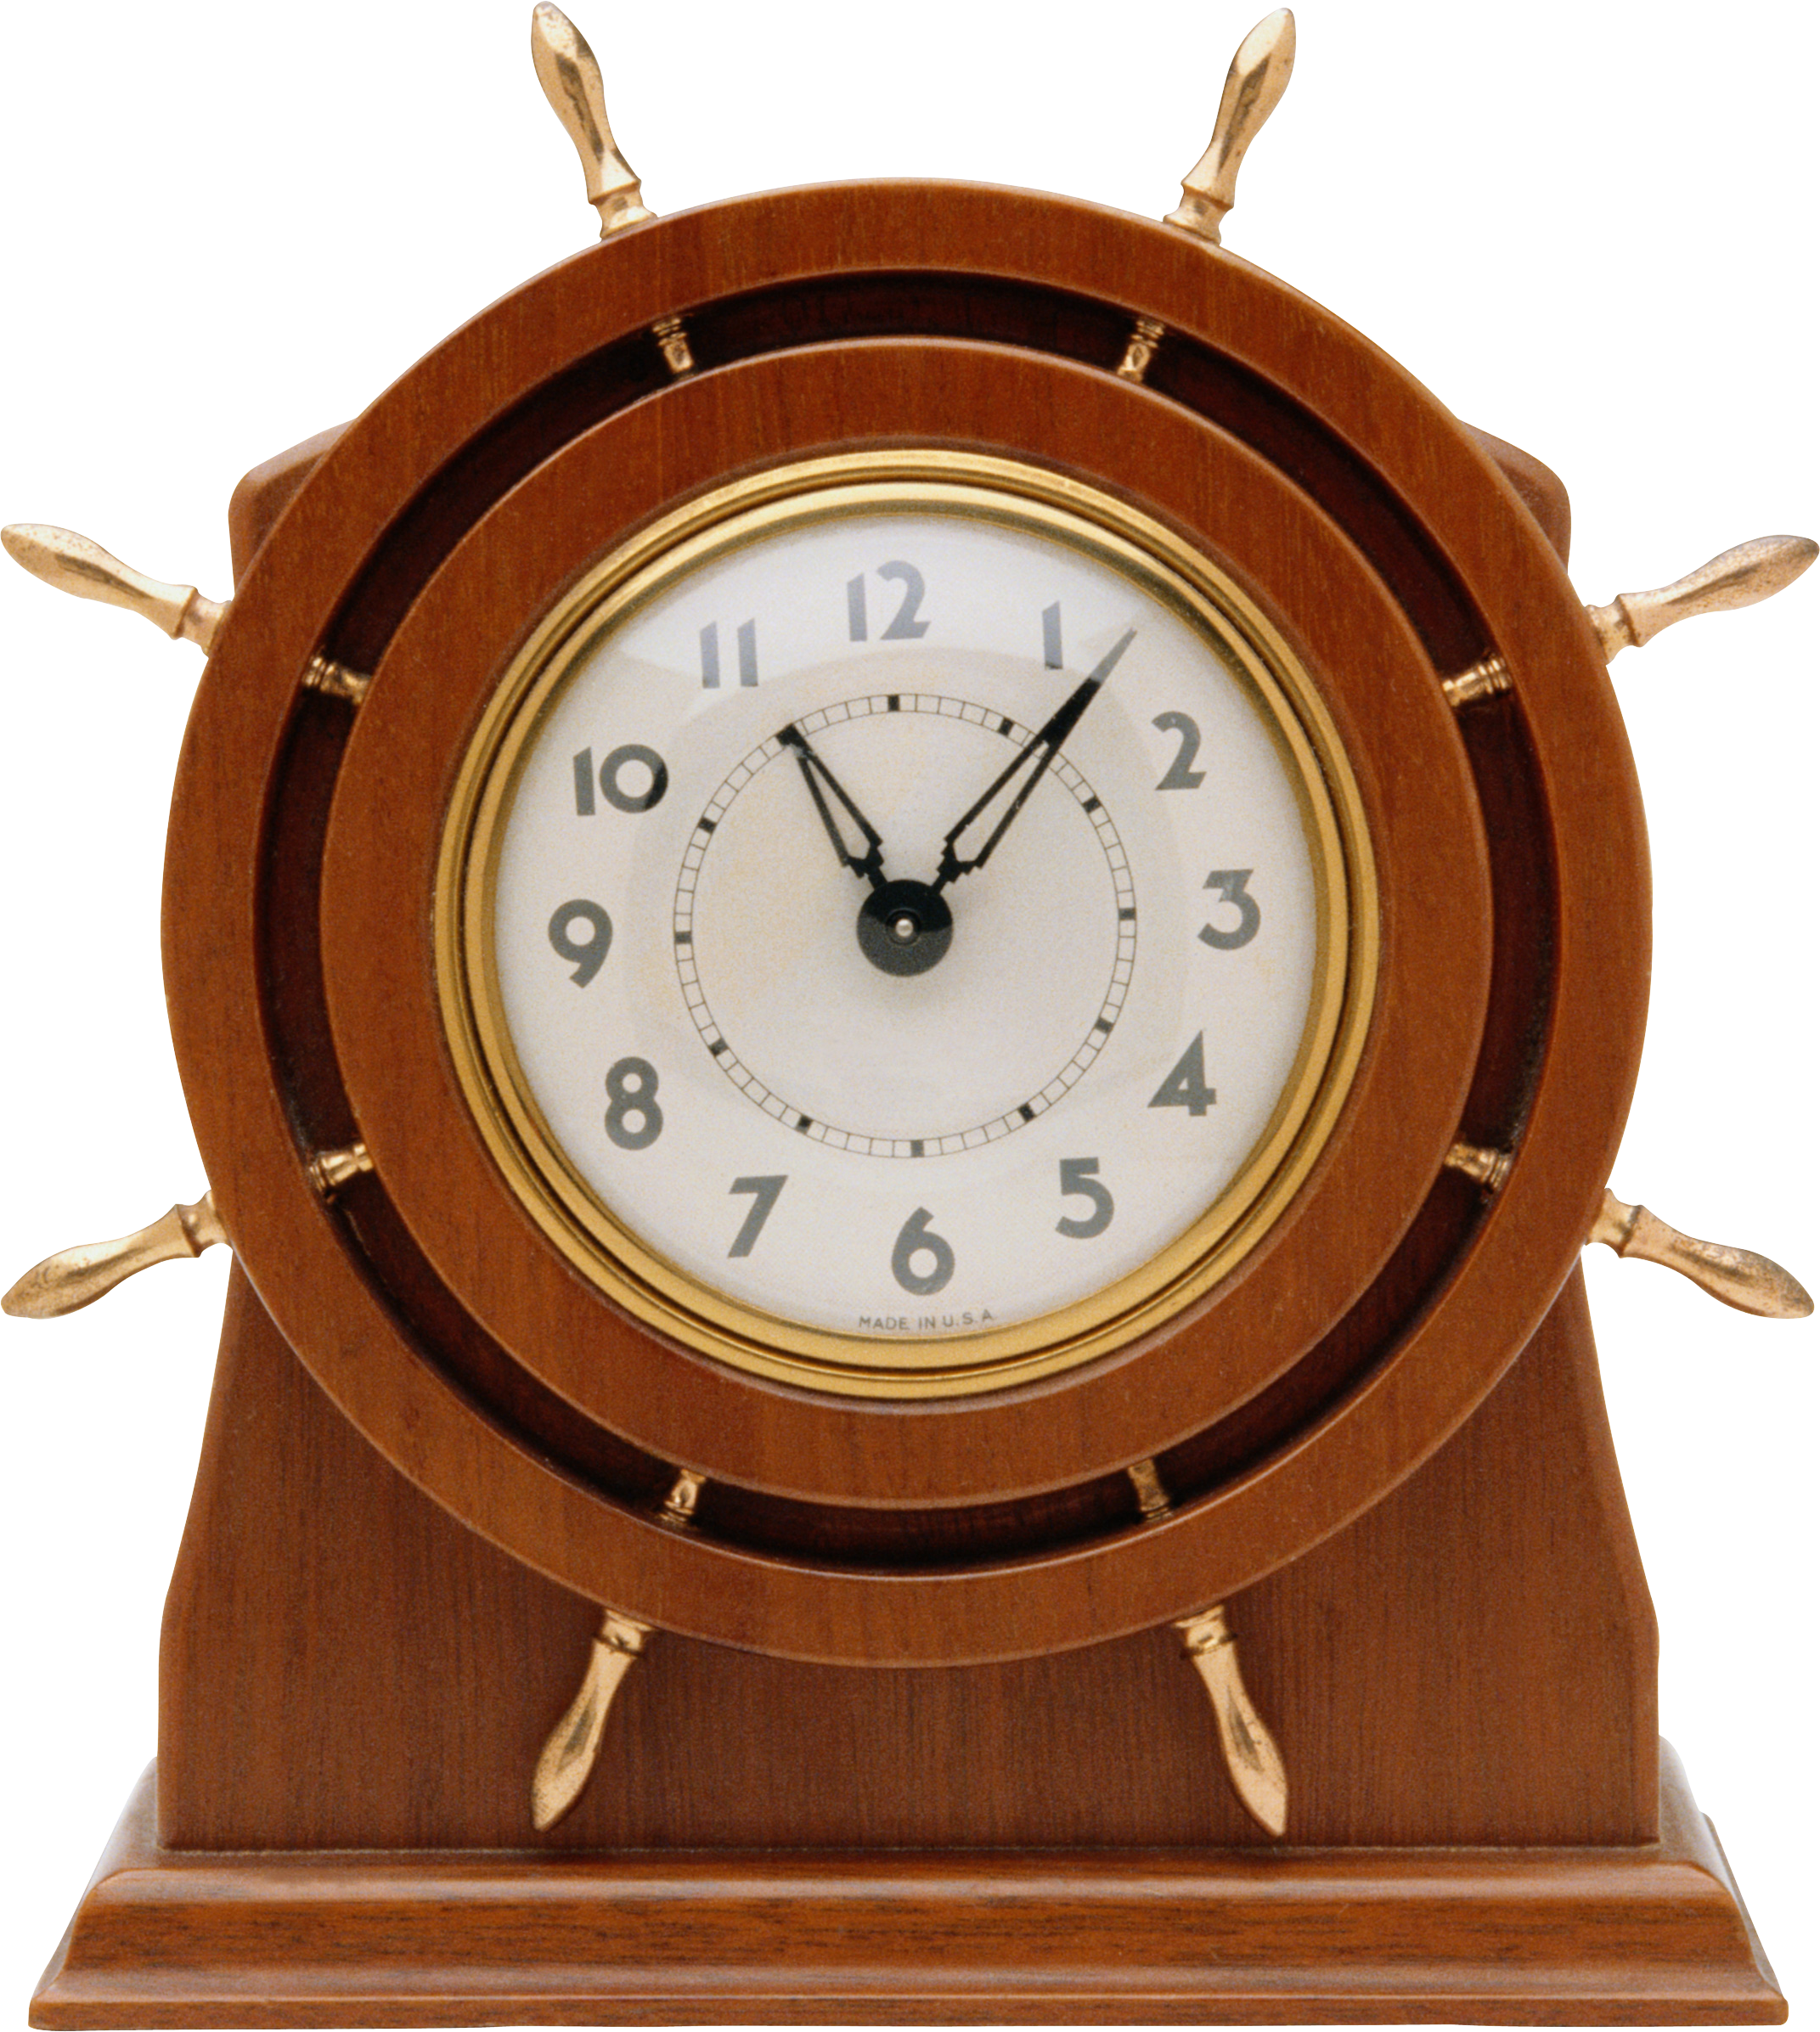 Alarm Wall Clock PNG Image - PurePNG | Free transparent ...